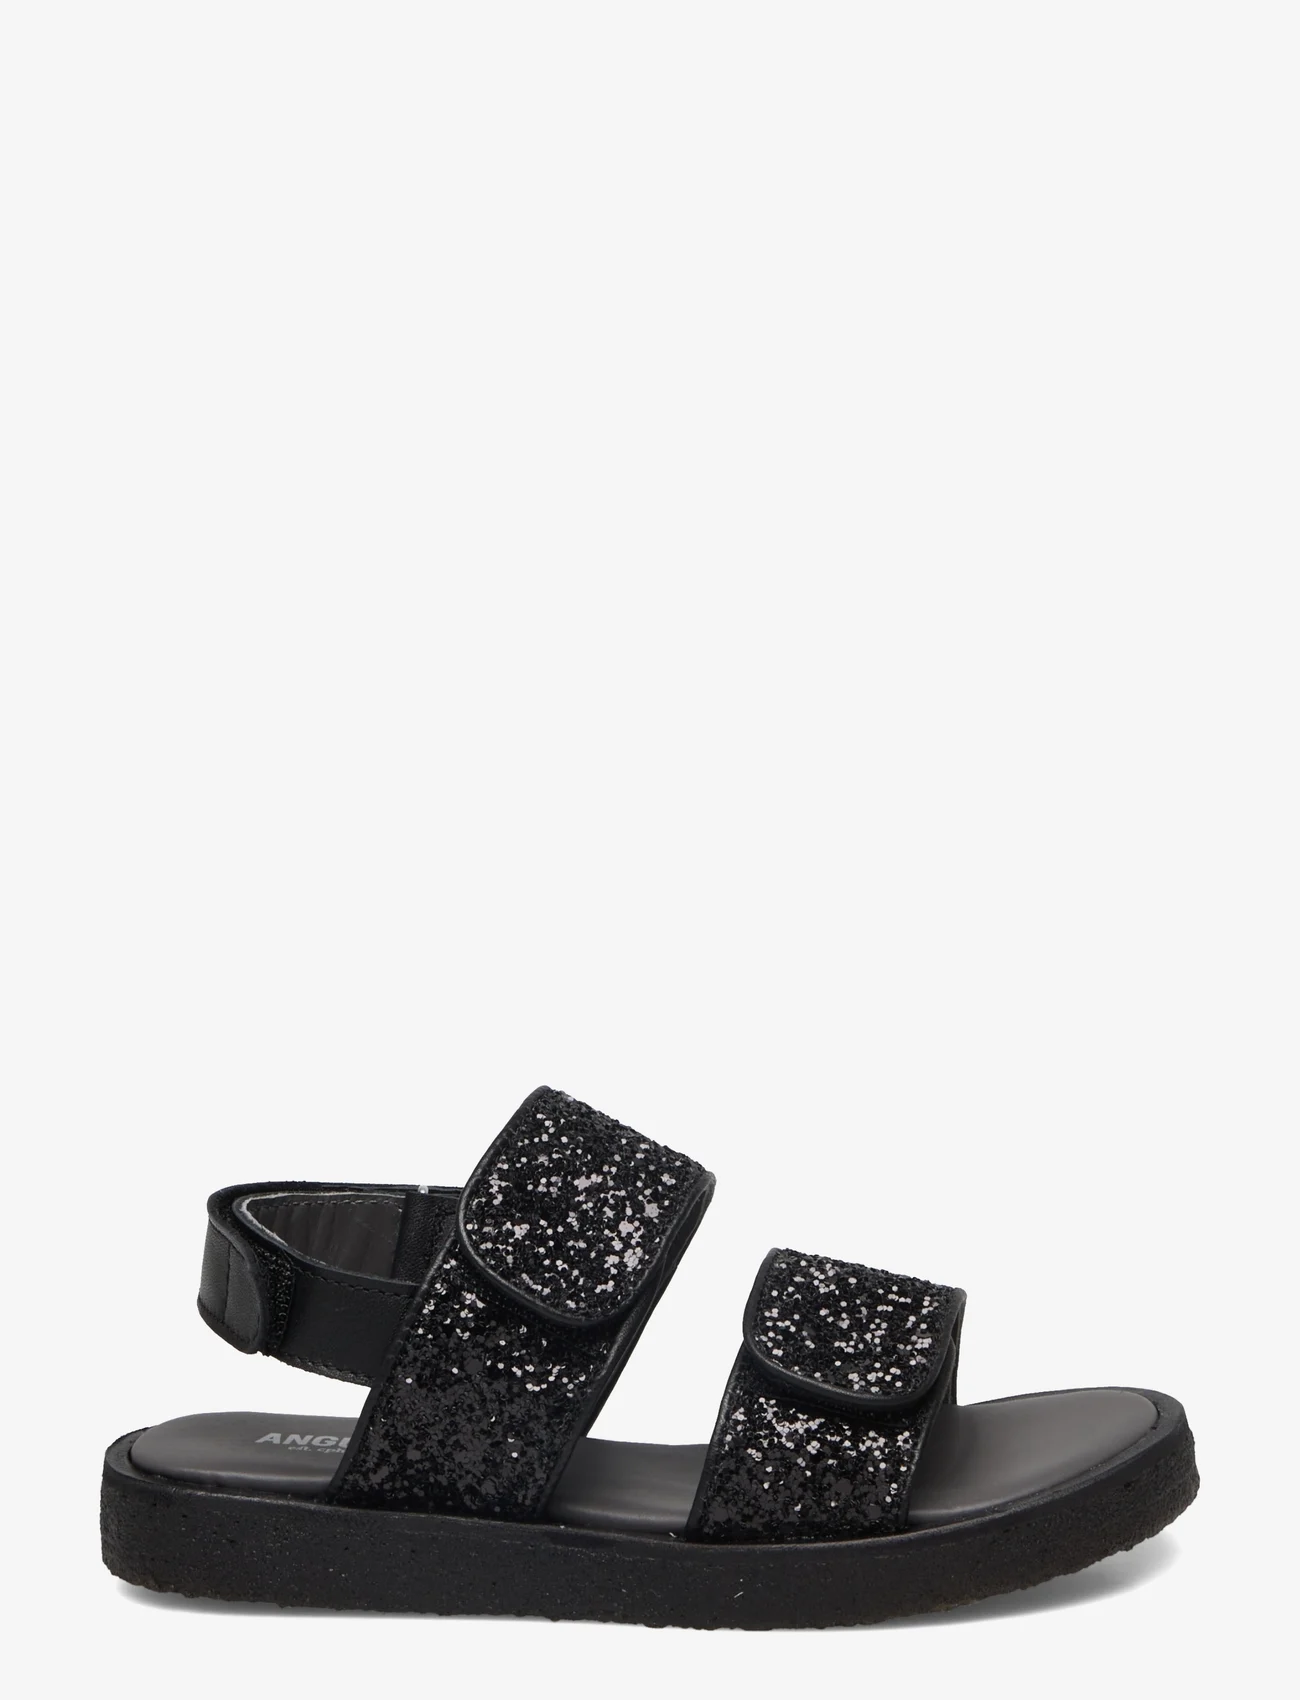 ANGULUS - Sandals - flat - open toe - op - summer savings - 1604/2486 black/black glitter - 1